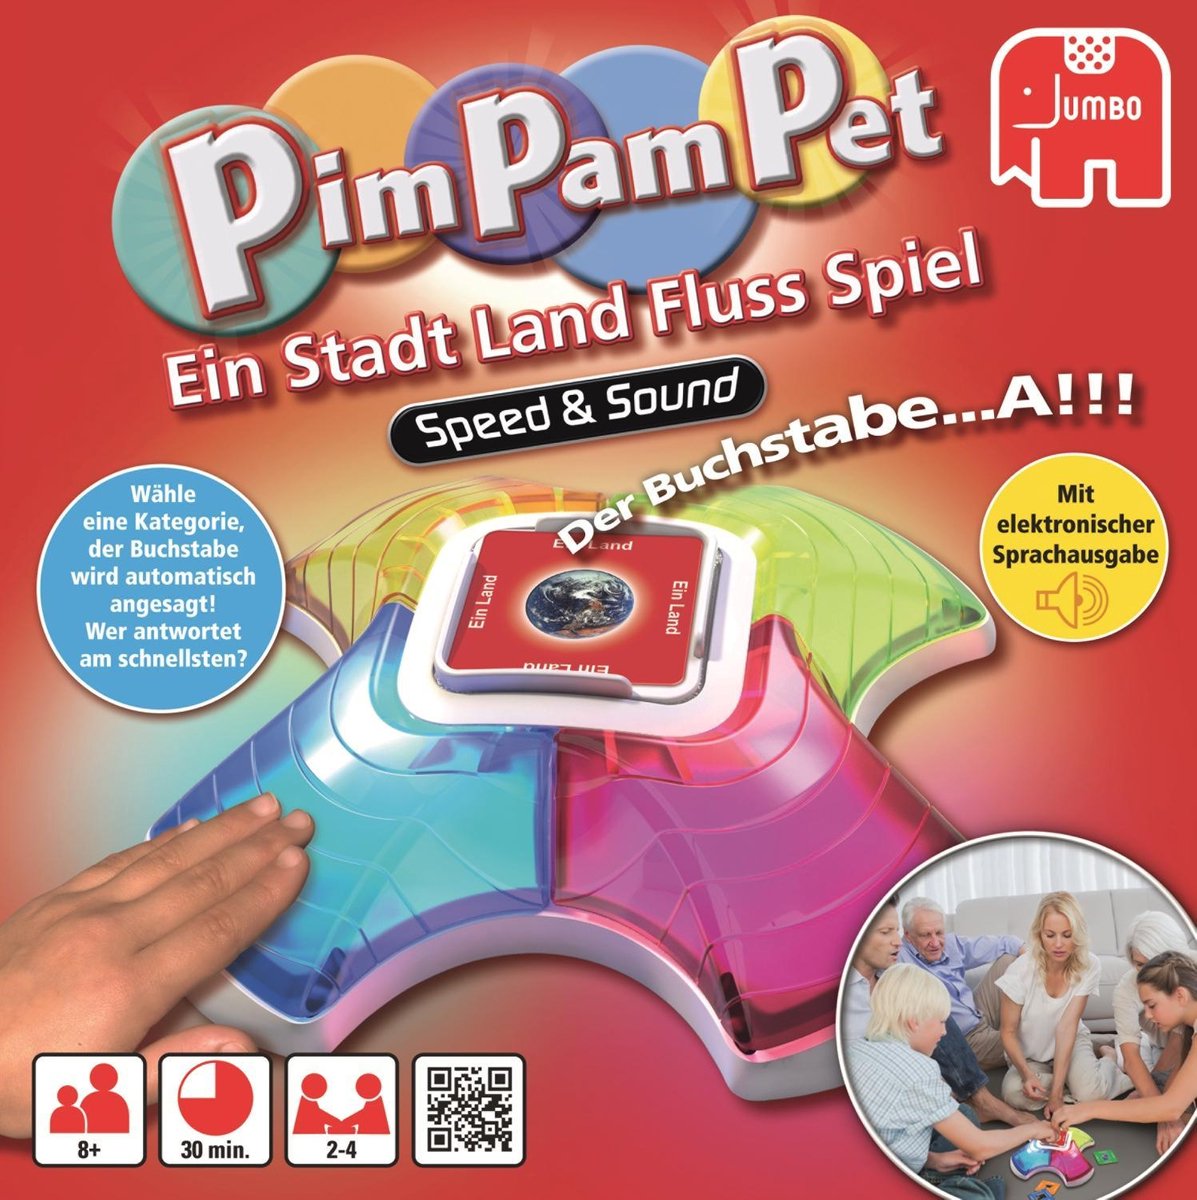 geweten Renderen Delegatie Pim Pam Pet Speed & Sound Ein Stadt Land Fluss Spiel Bordspel Lateraal  denken | bol.com